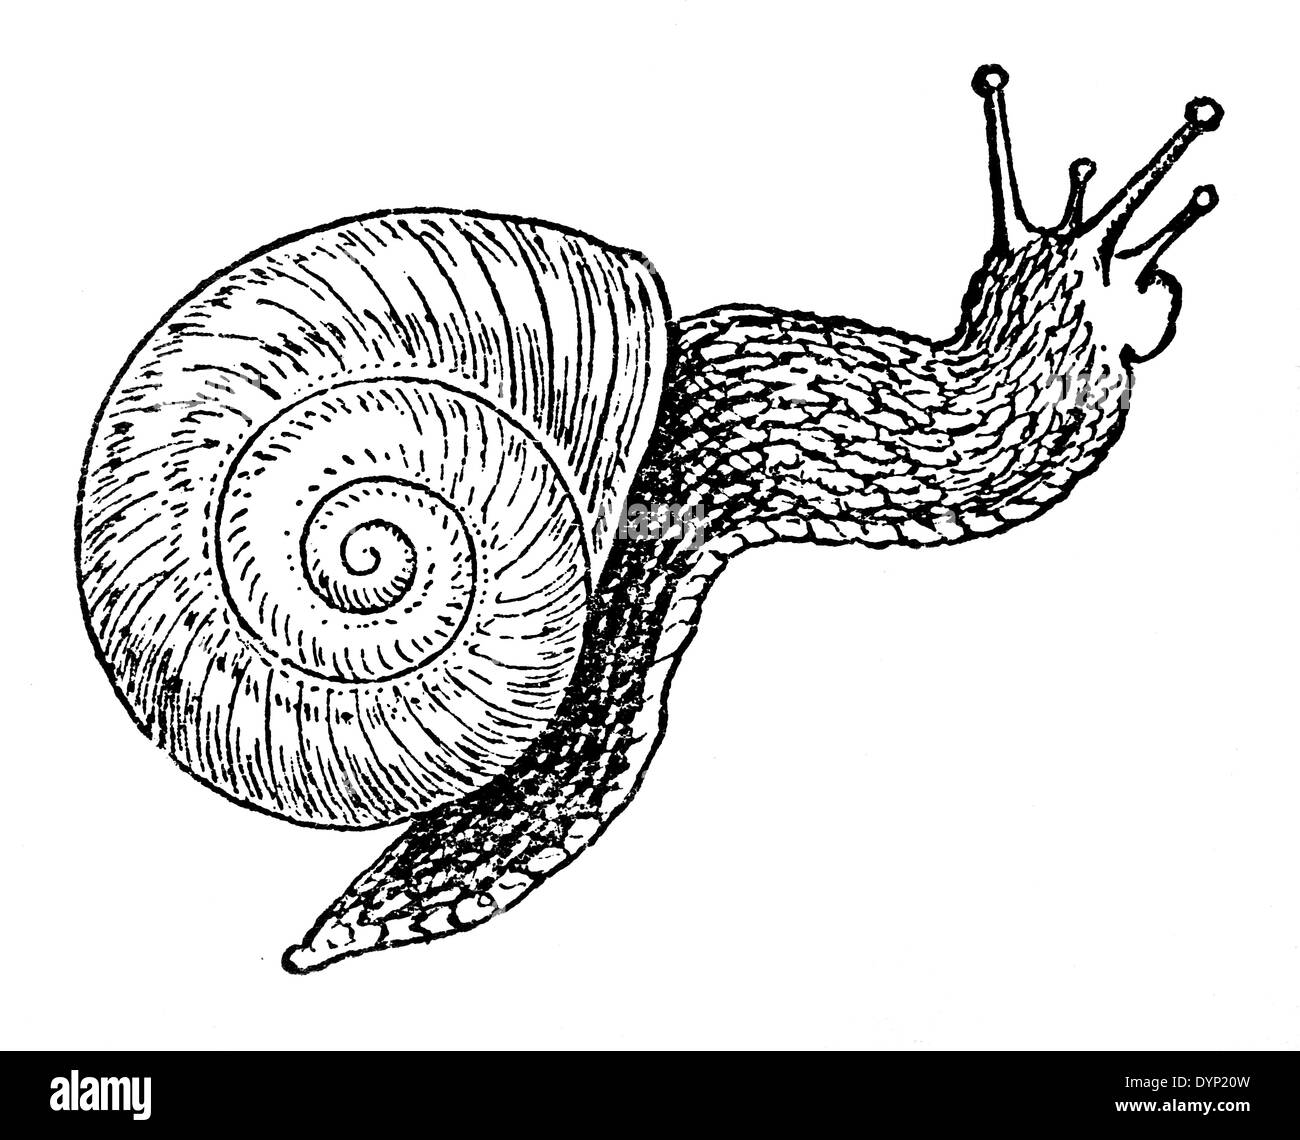 Burgundy snail, Roman snail, edible snail or escargot (Helix pomatia), illustration from Soviet encyclopedia, 1927 Stock Photo